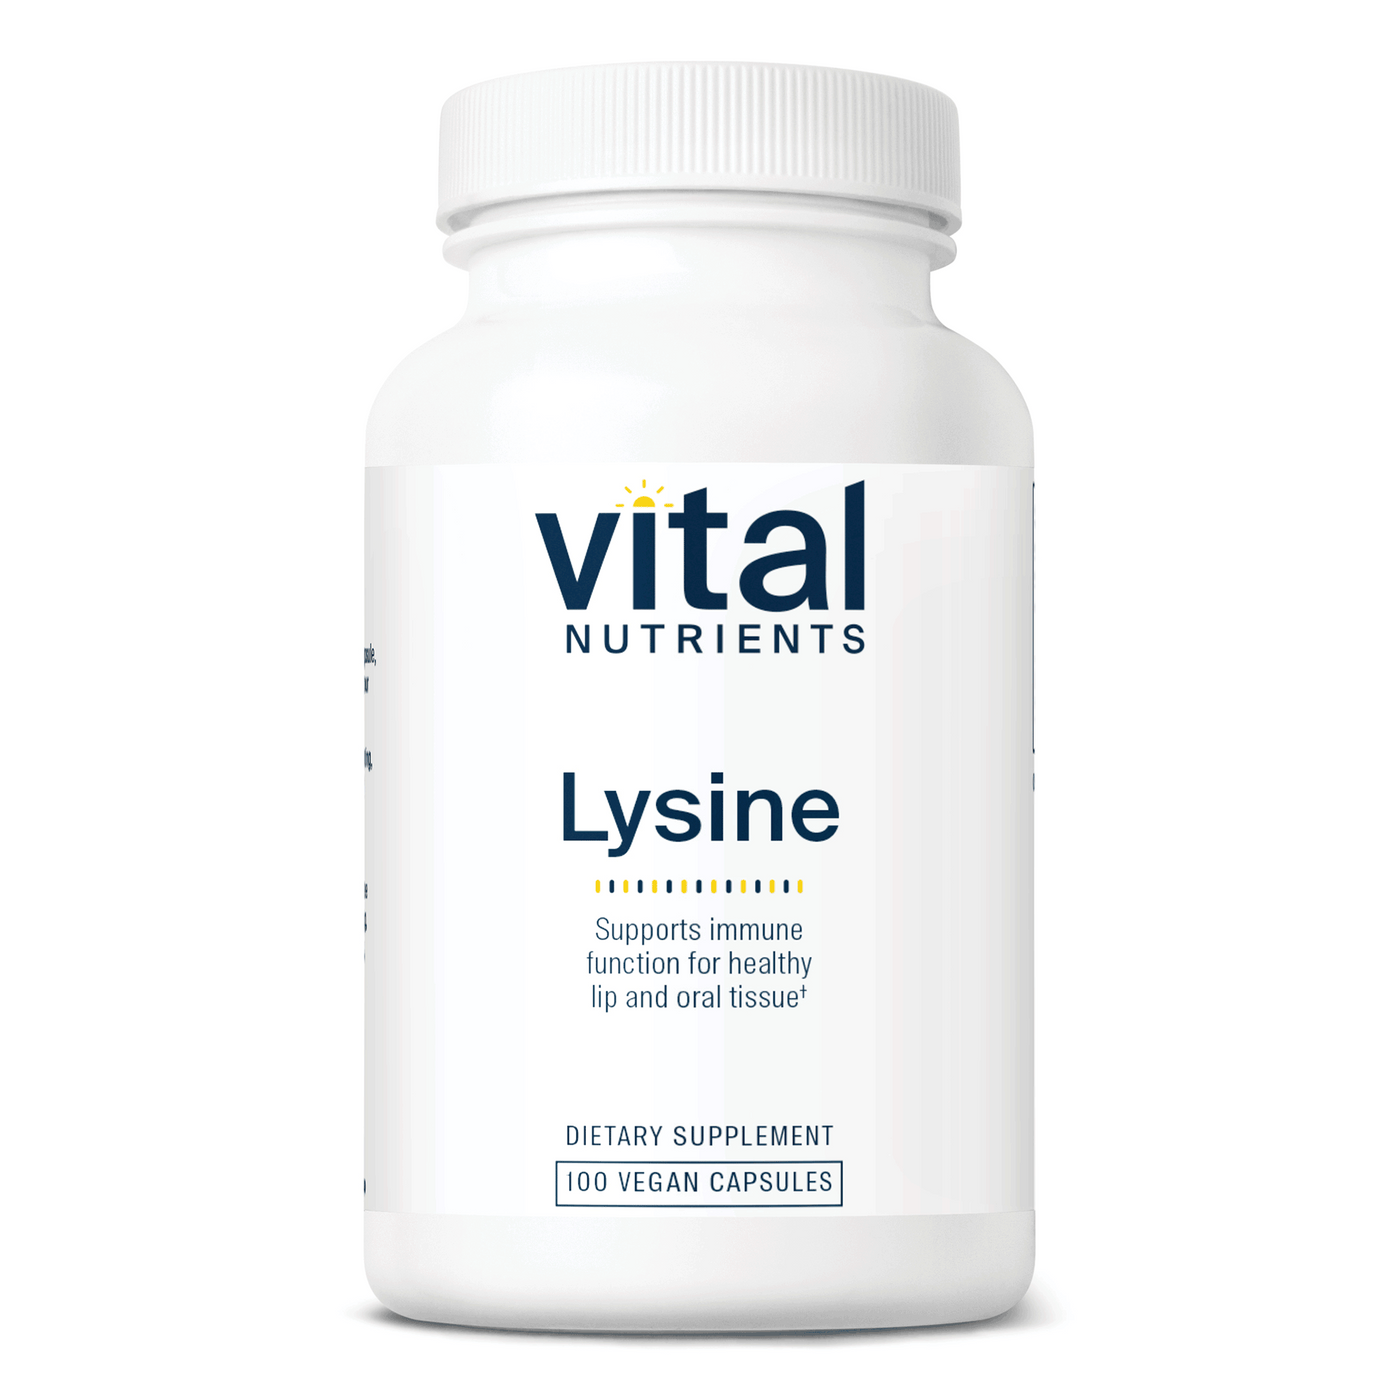 L-Lysine 500 mg  Curated Wellness